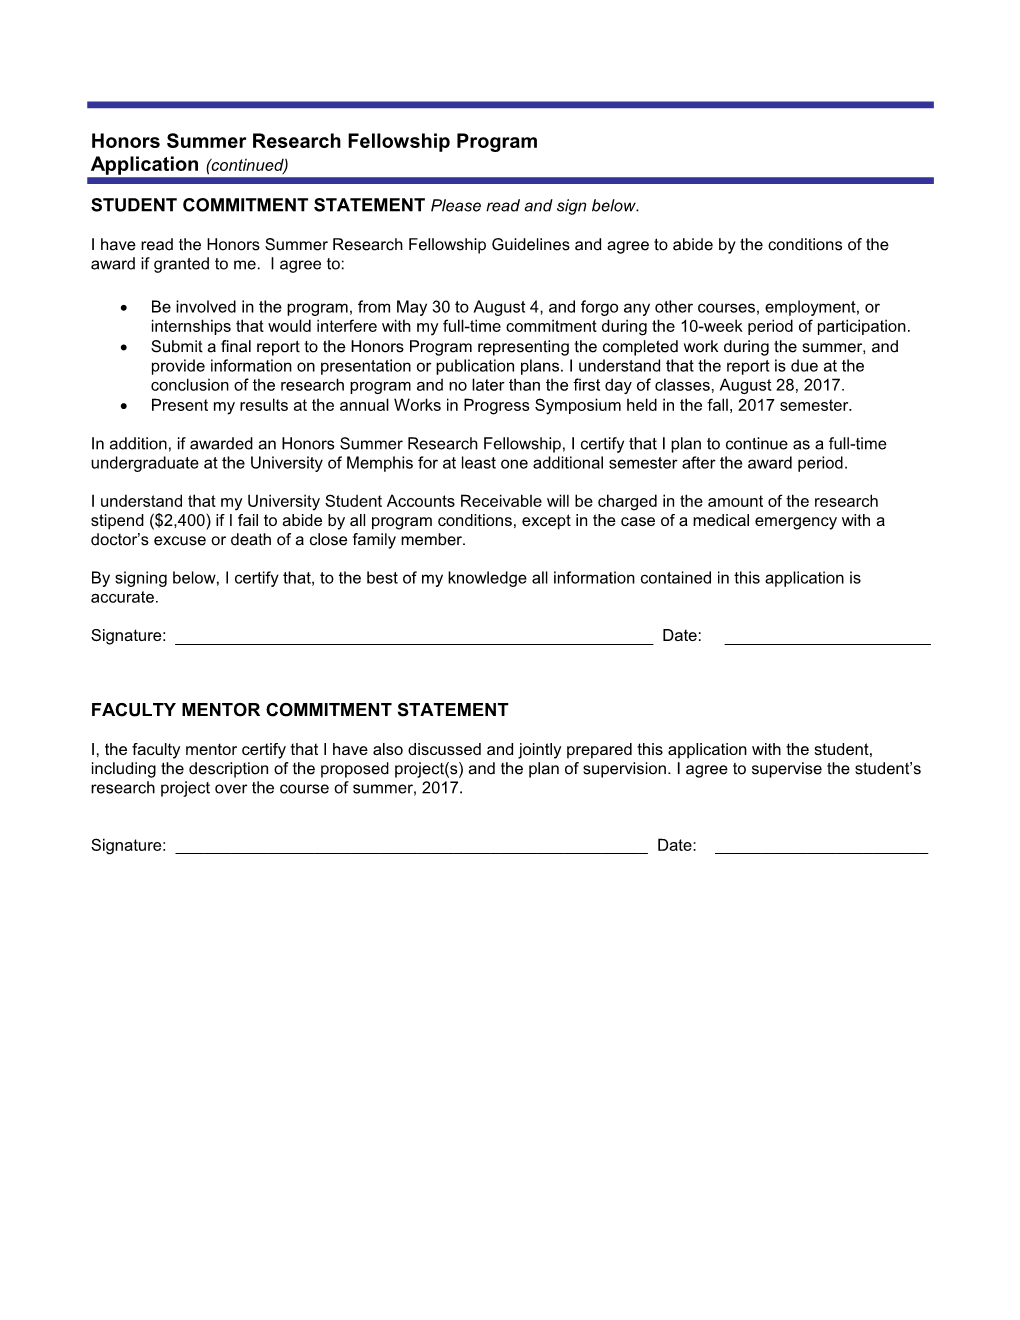 CDC Research Participation Program Application